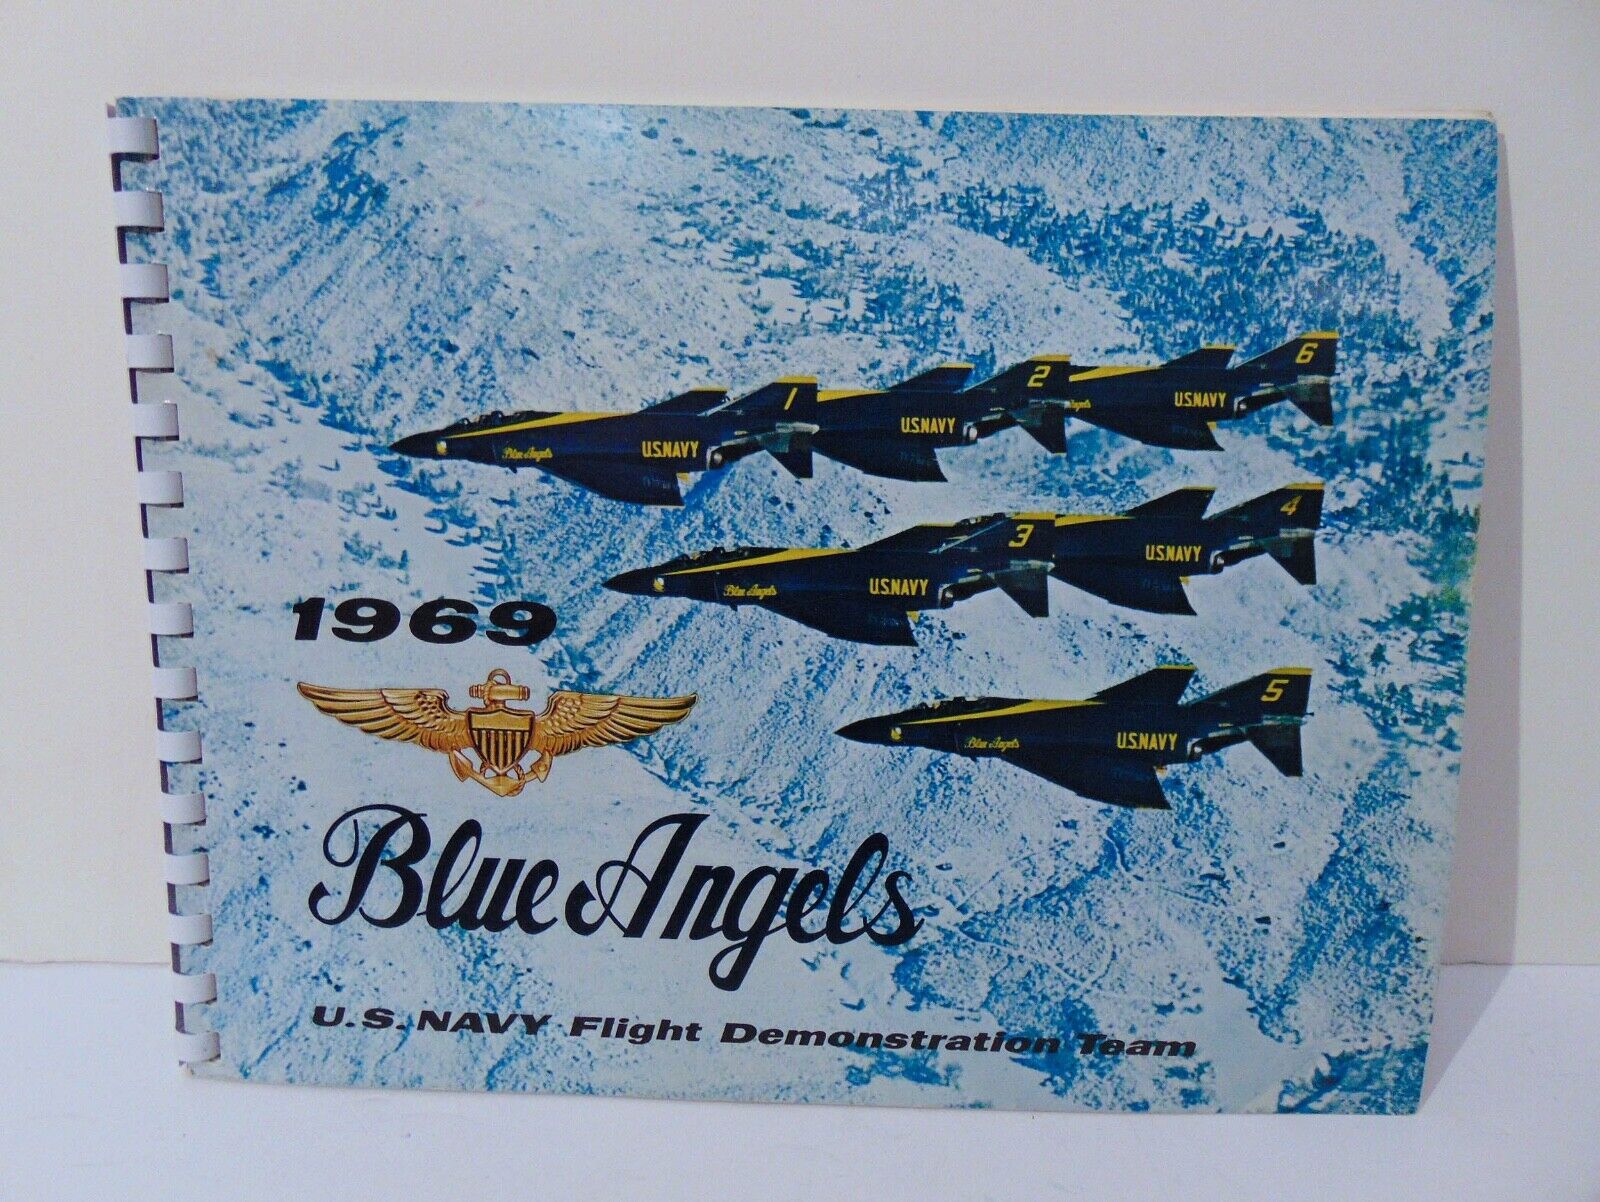 1969 U.S.Navy Blue Angels Flight Demonstration Team Show Program, F-4 Phantom